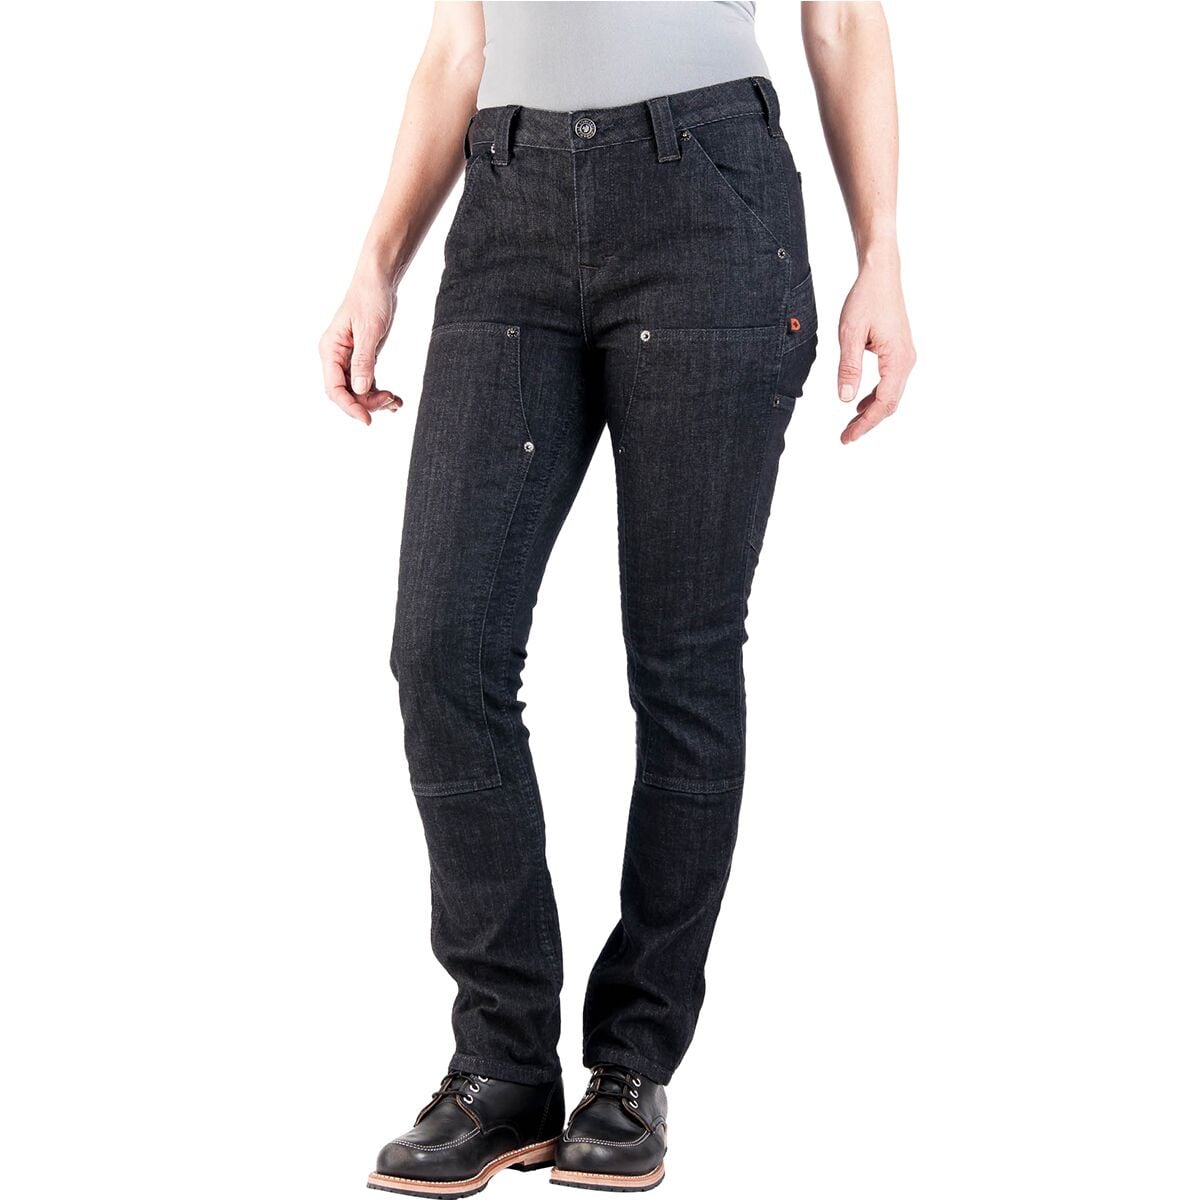 Dovetail Workwear Women's Straight Leg Mid-Rise Britt Utility Pants